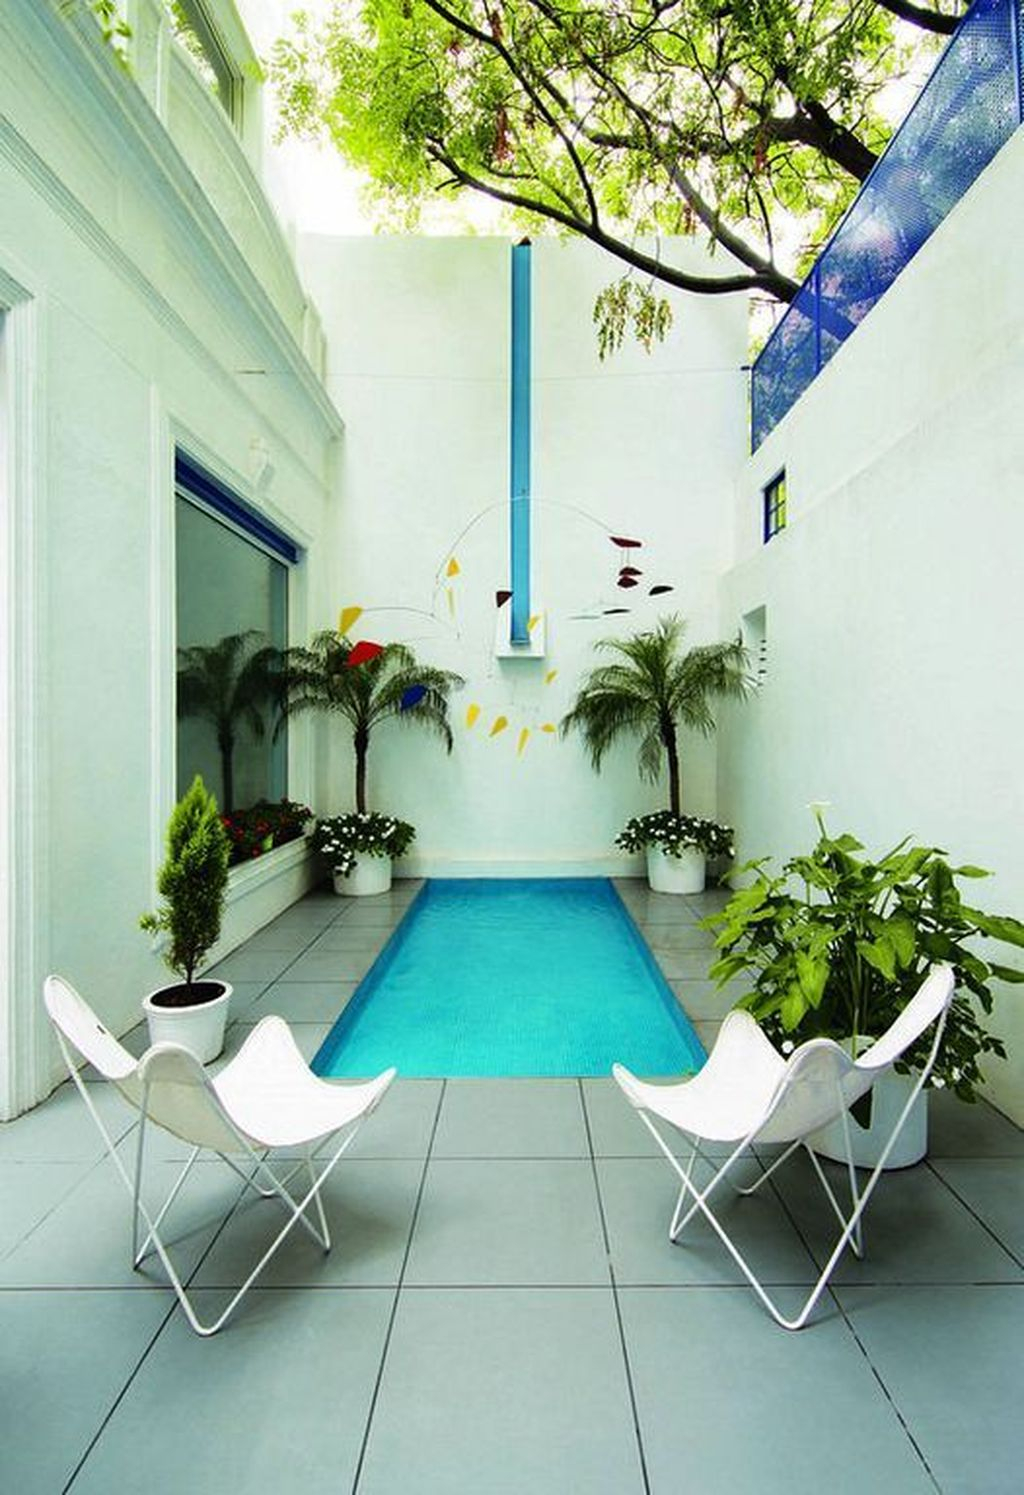 Marvelous Small Swimming Pool Ideas23